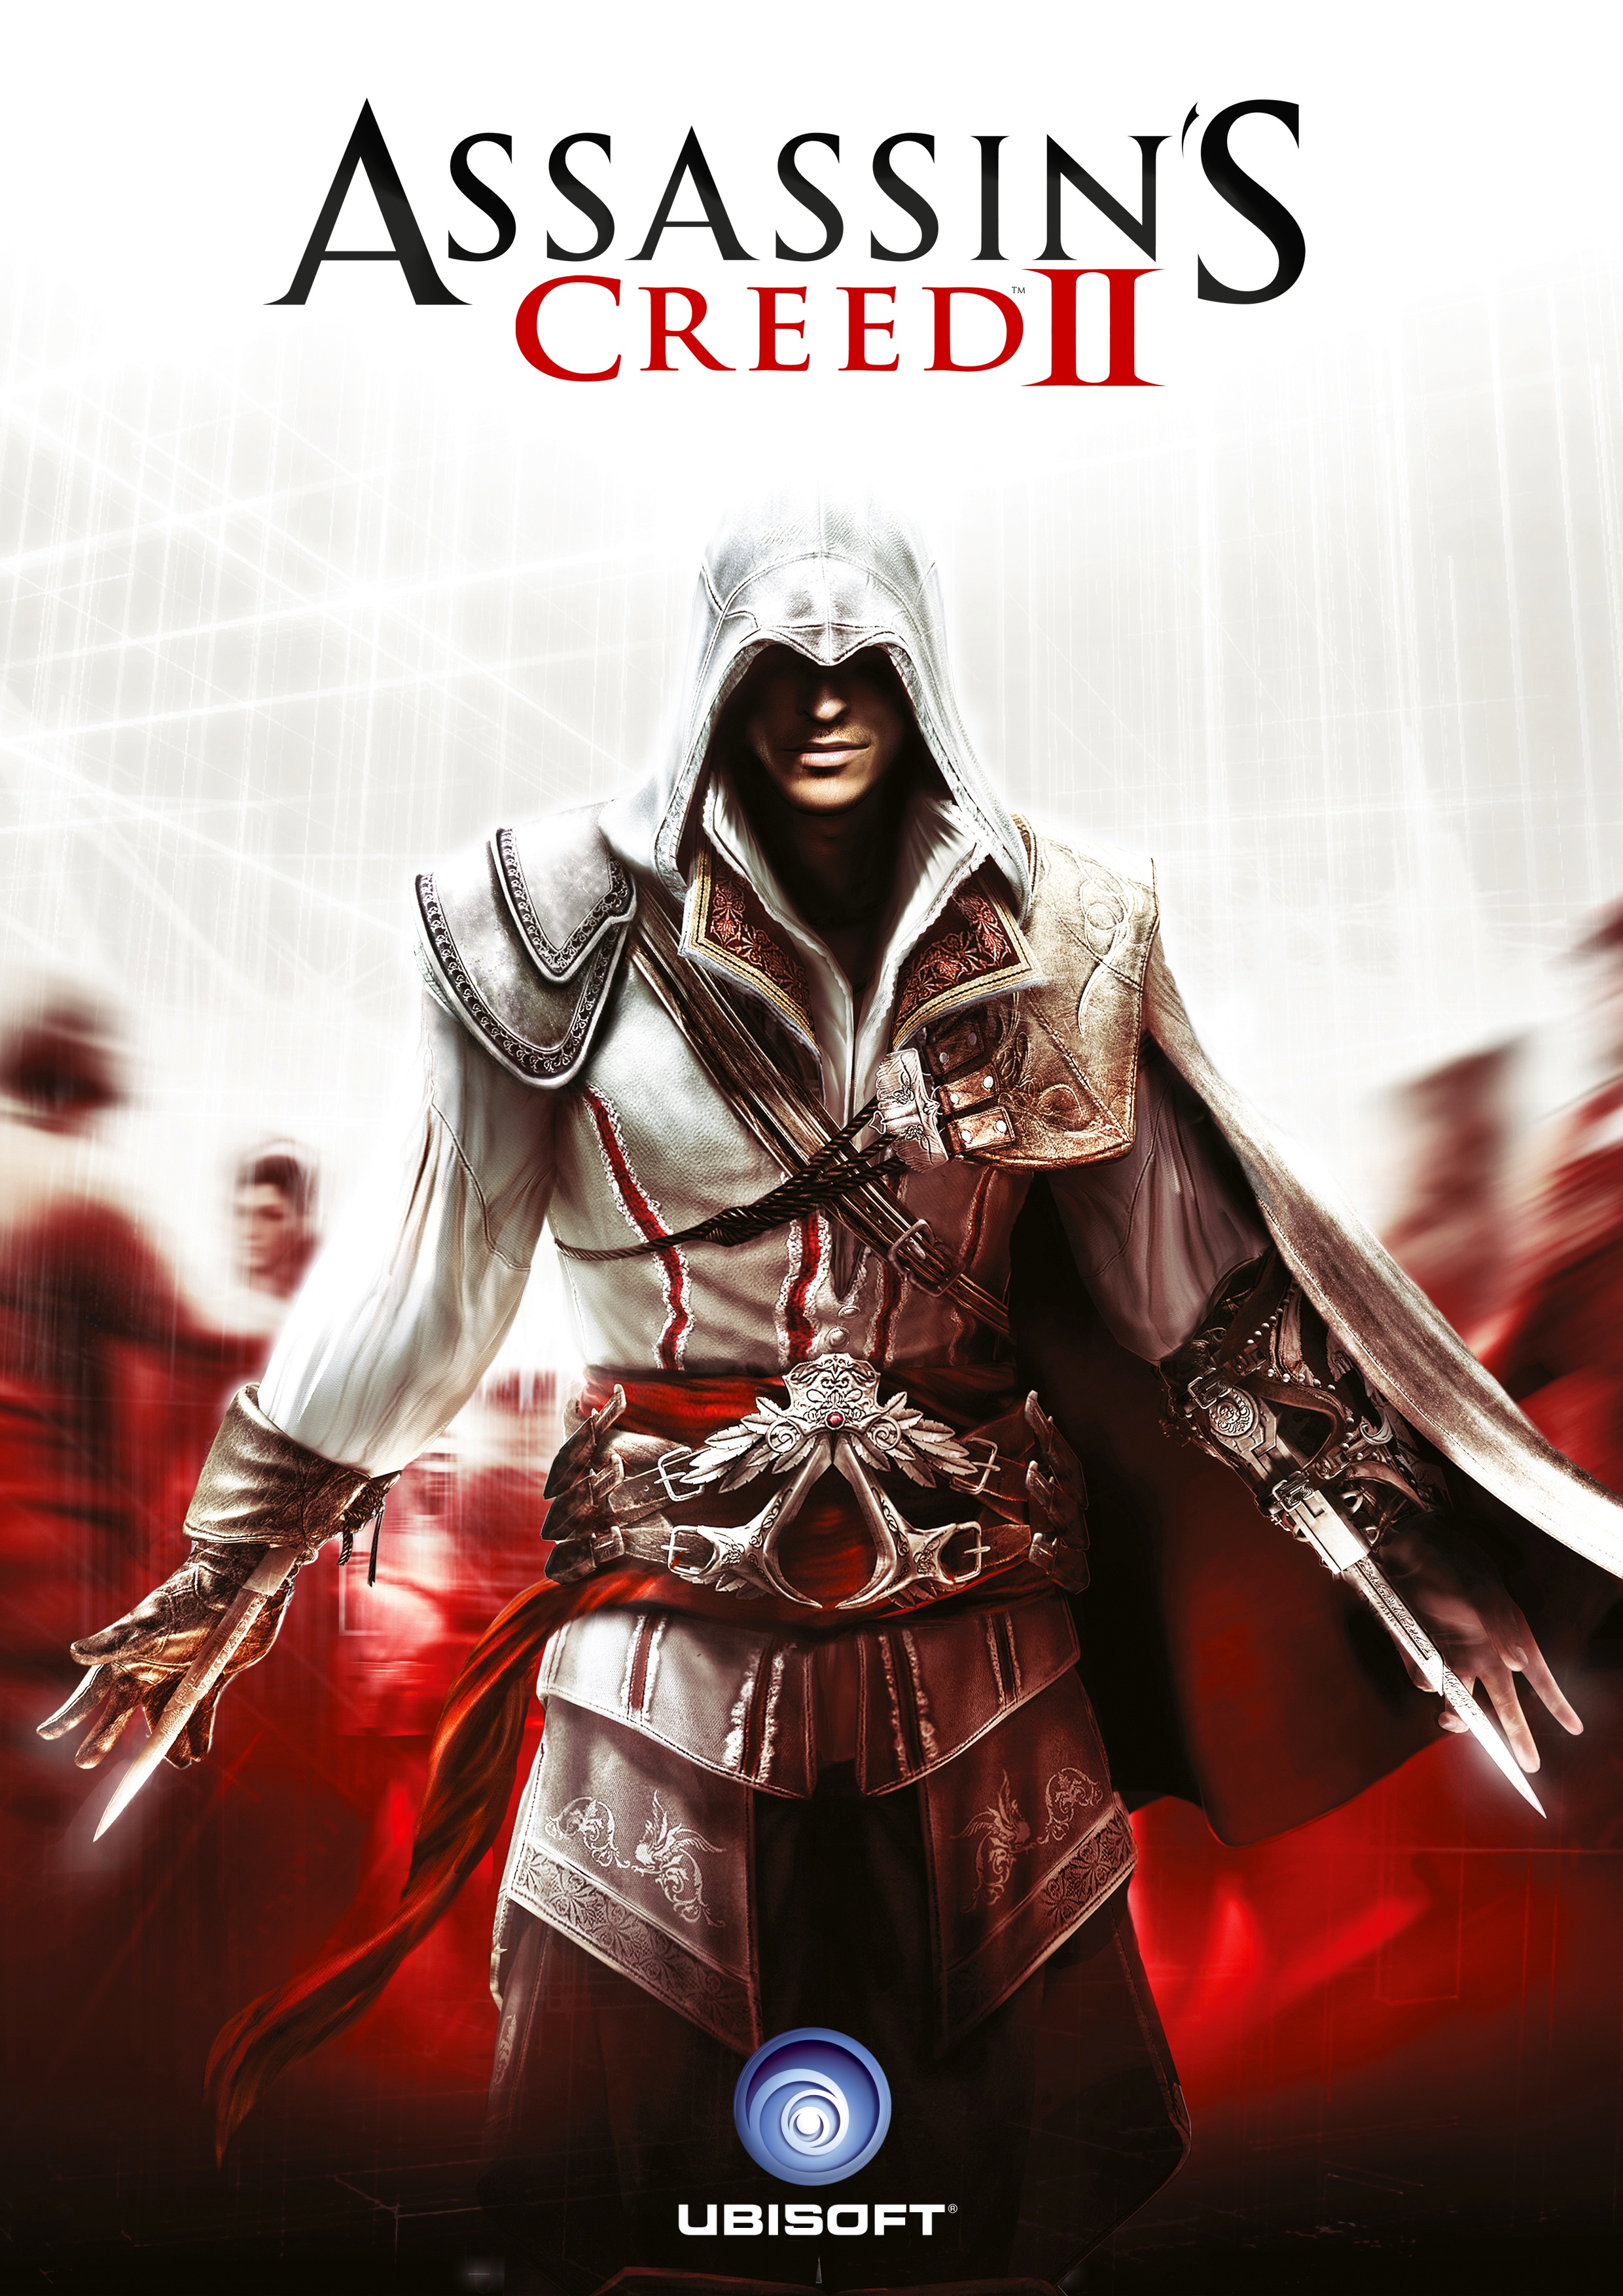 Vuestra Mejor Cinematica En El Foro Gamers Assassins Creed 2014 08